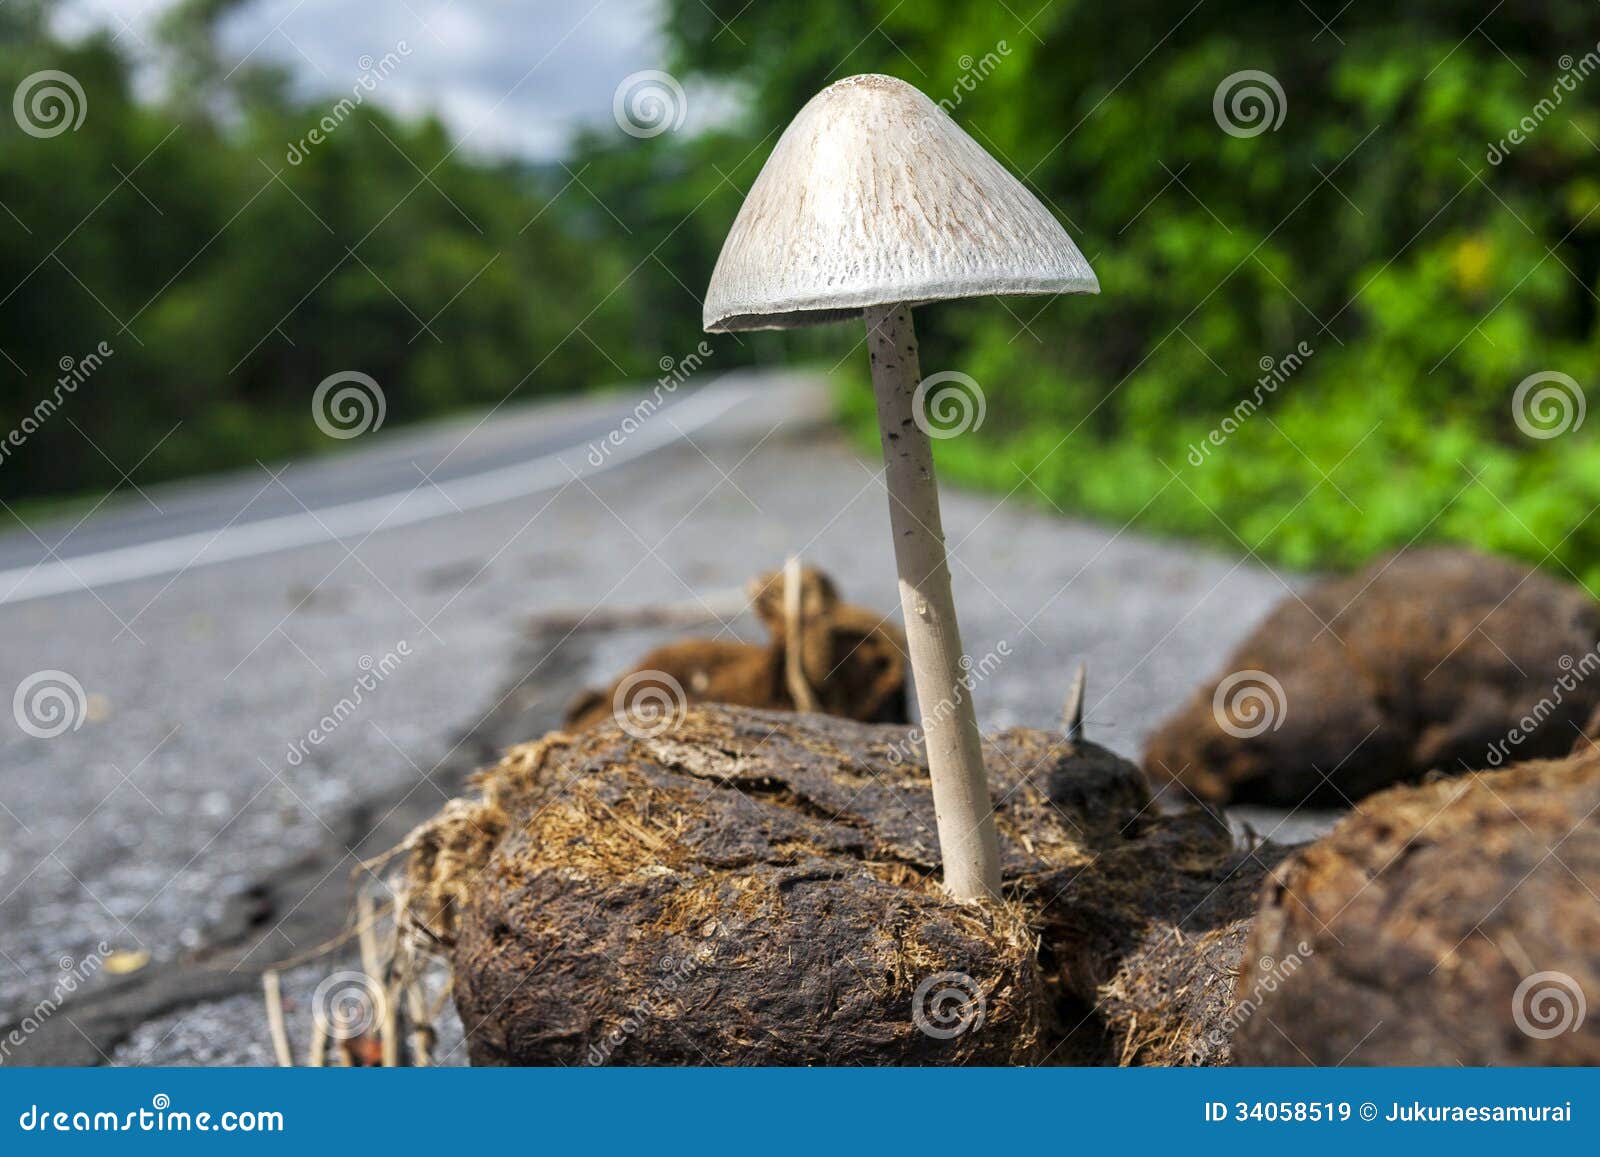 Mushroom grow up in elephant excrement